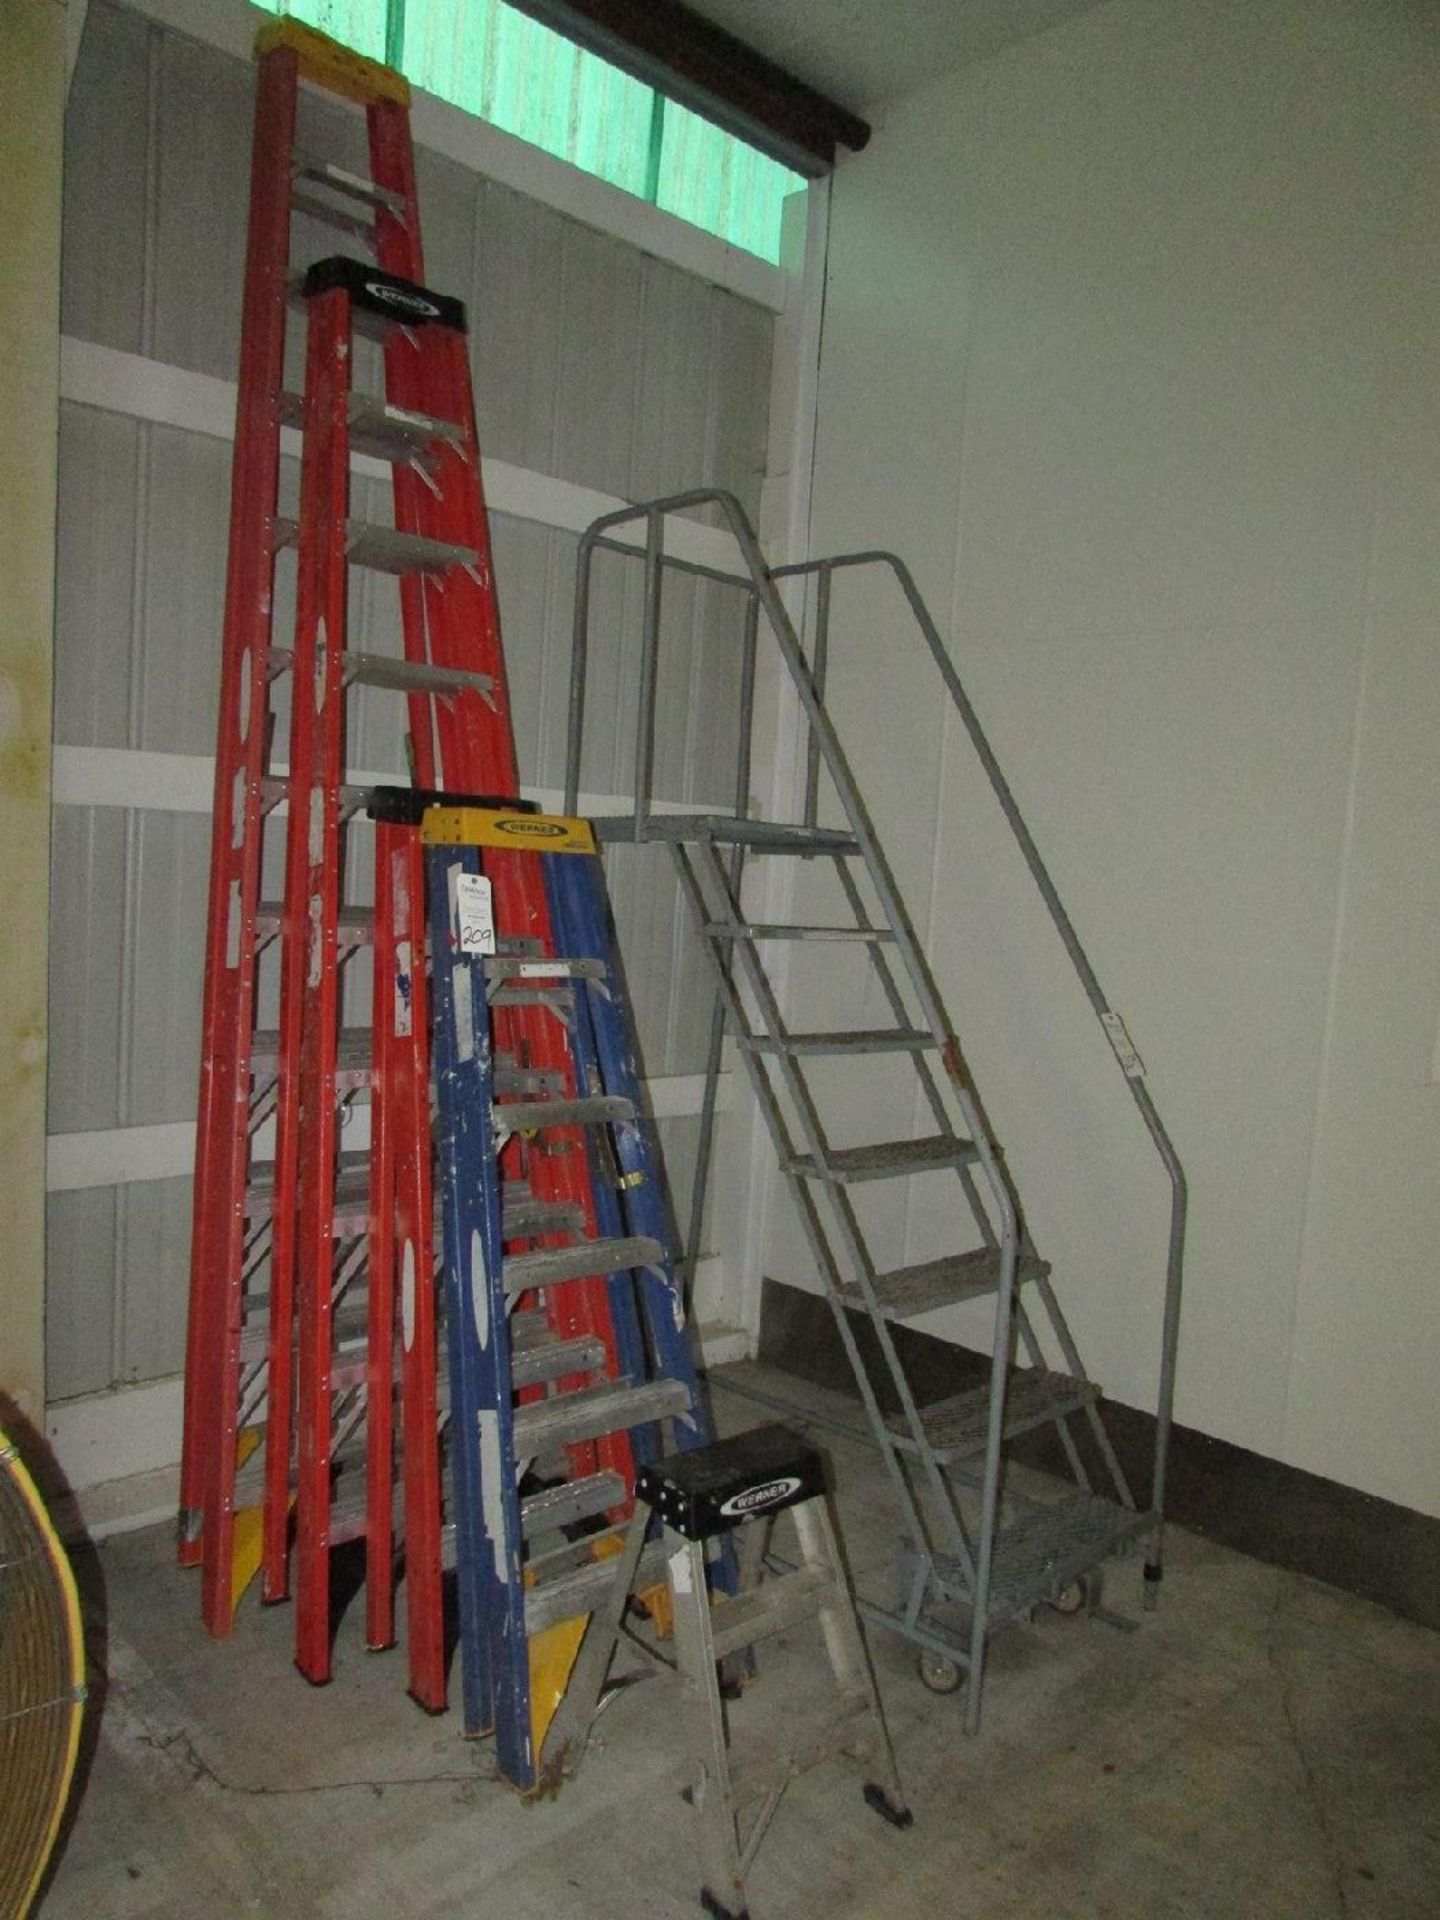 A-Frame Ladders